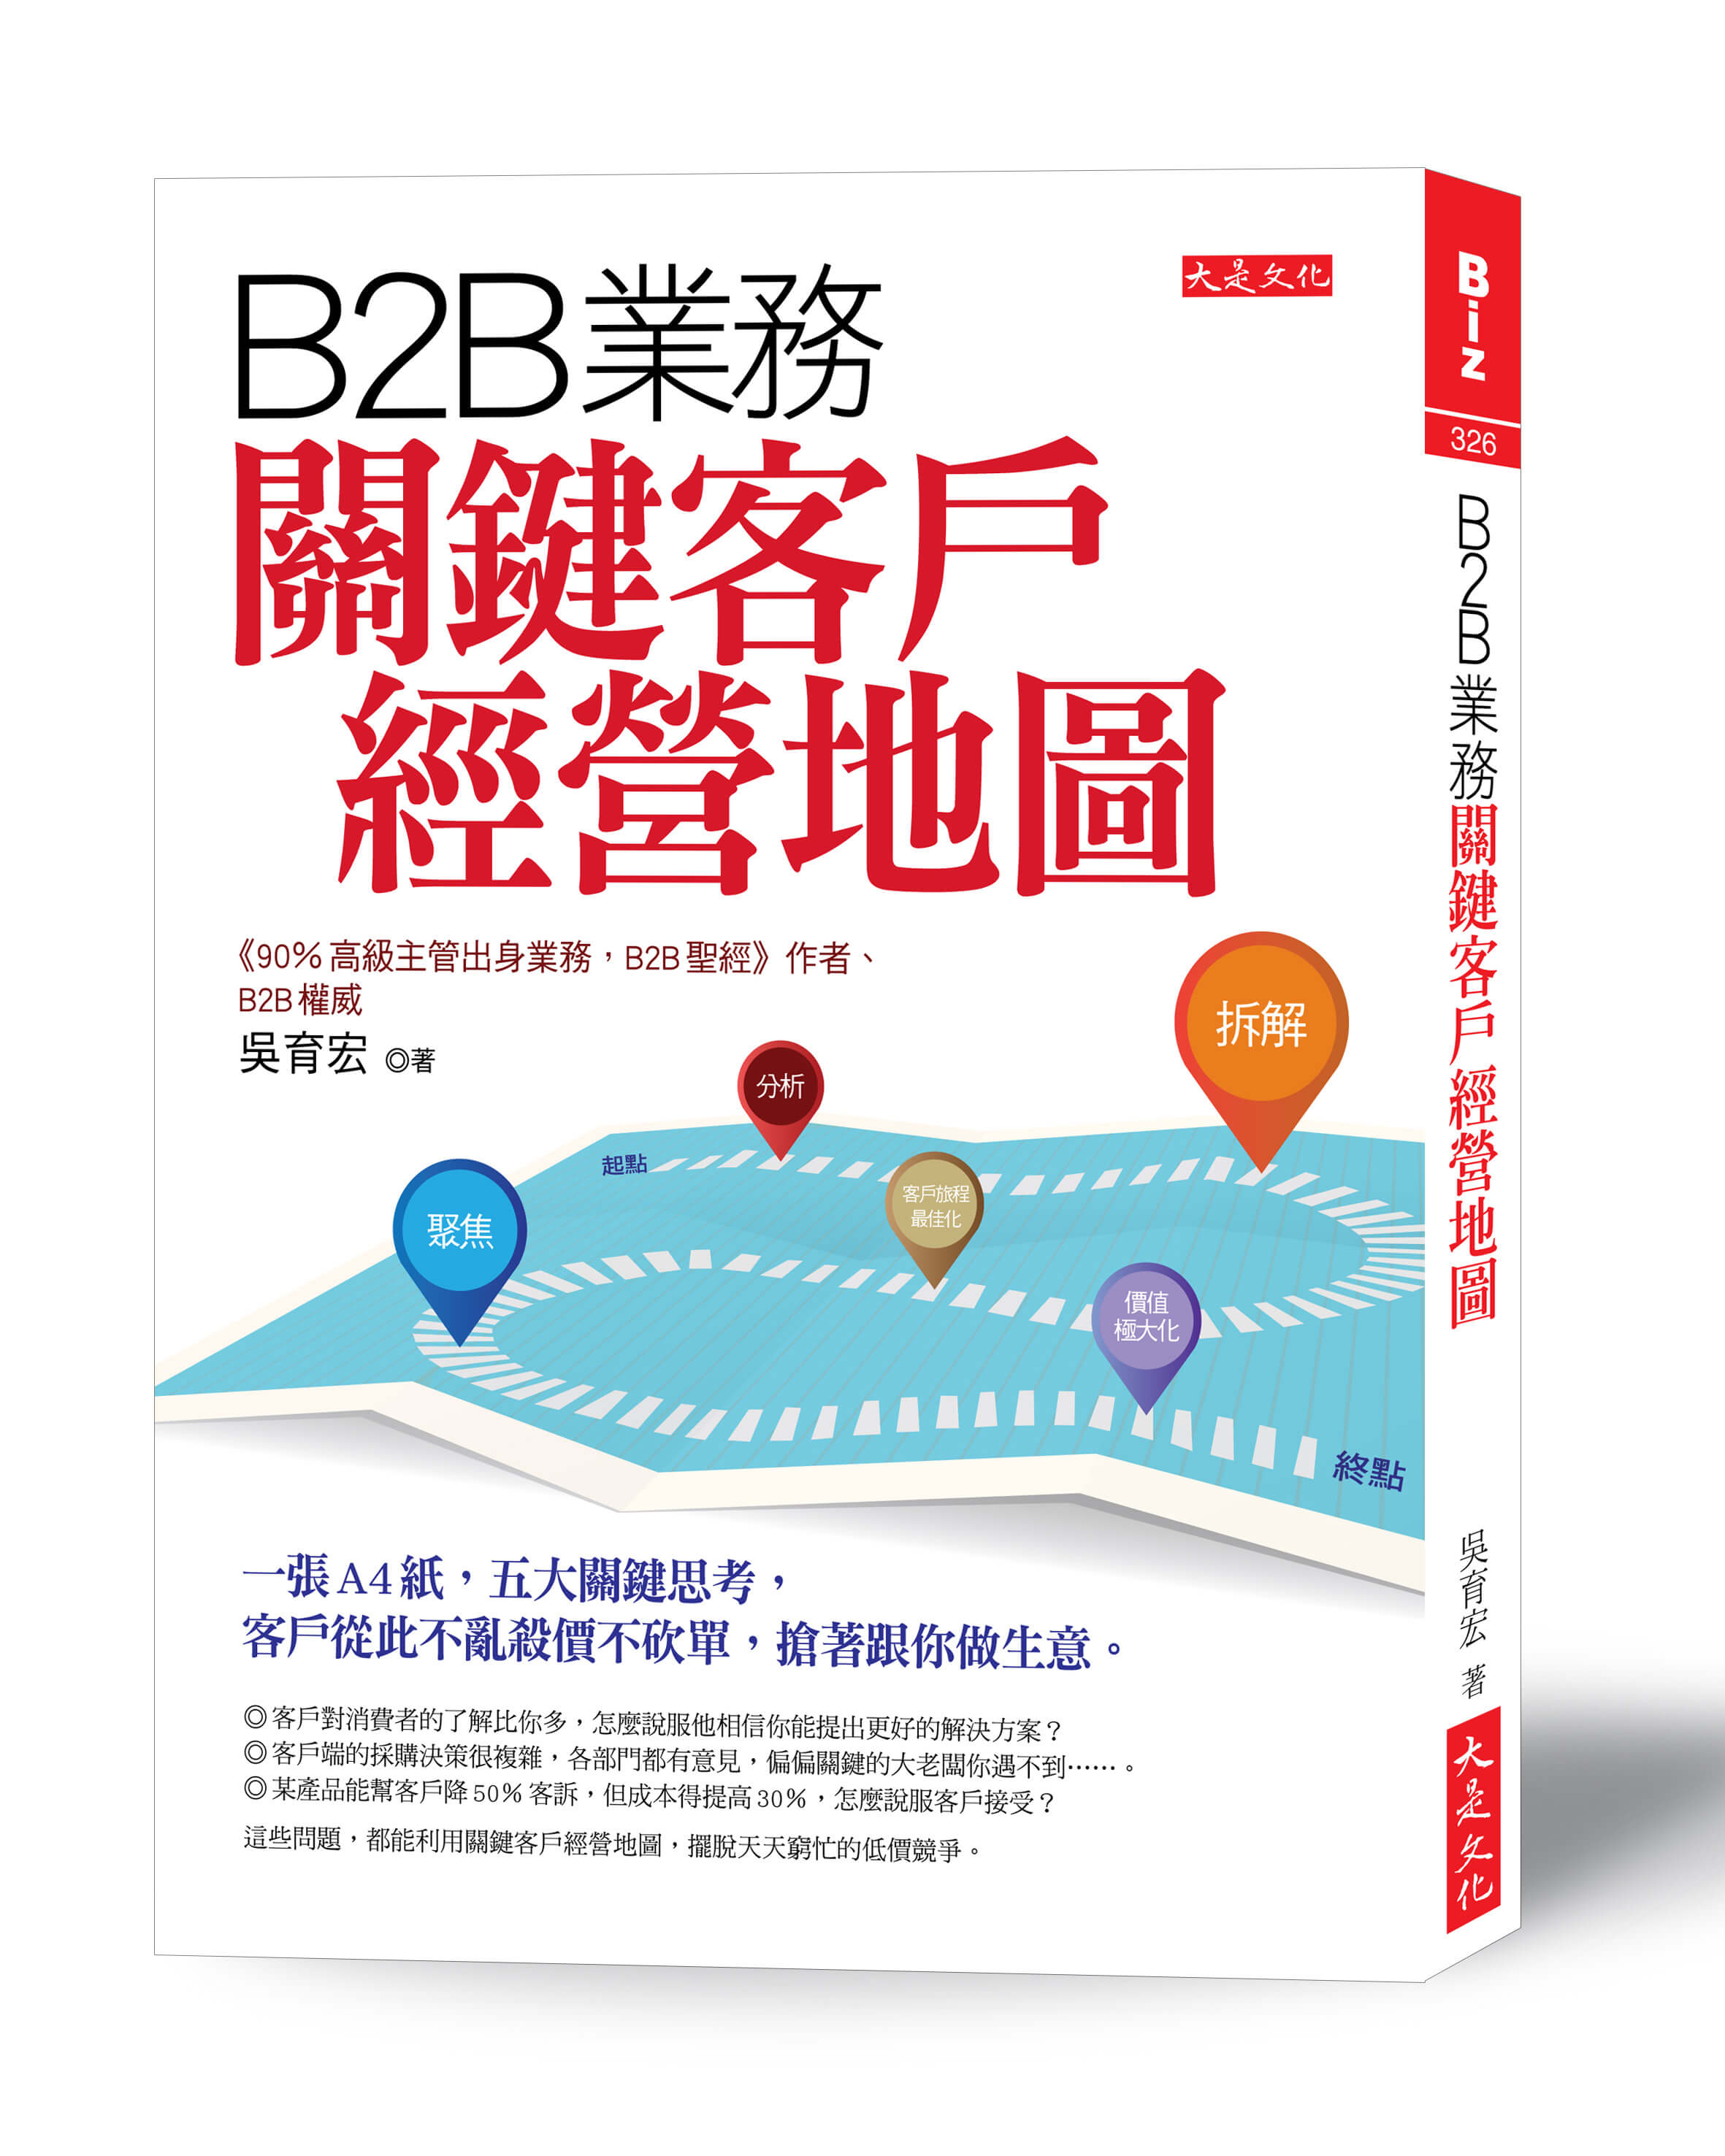 B2B業務關鍵客戶經營地圖 吳育宏